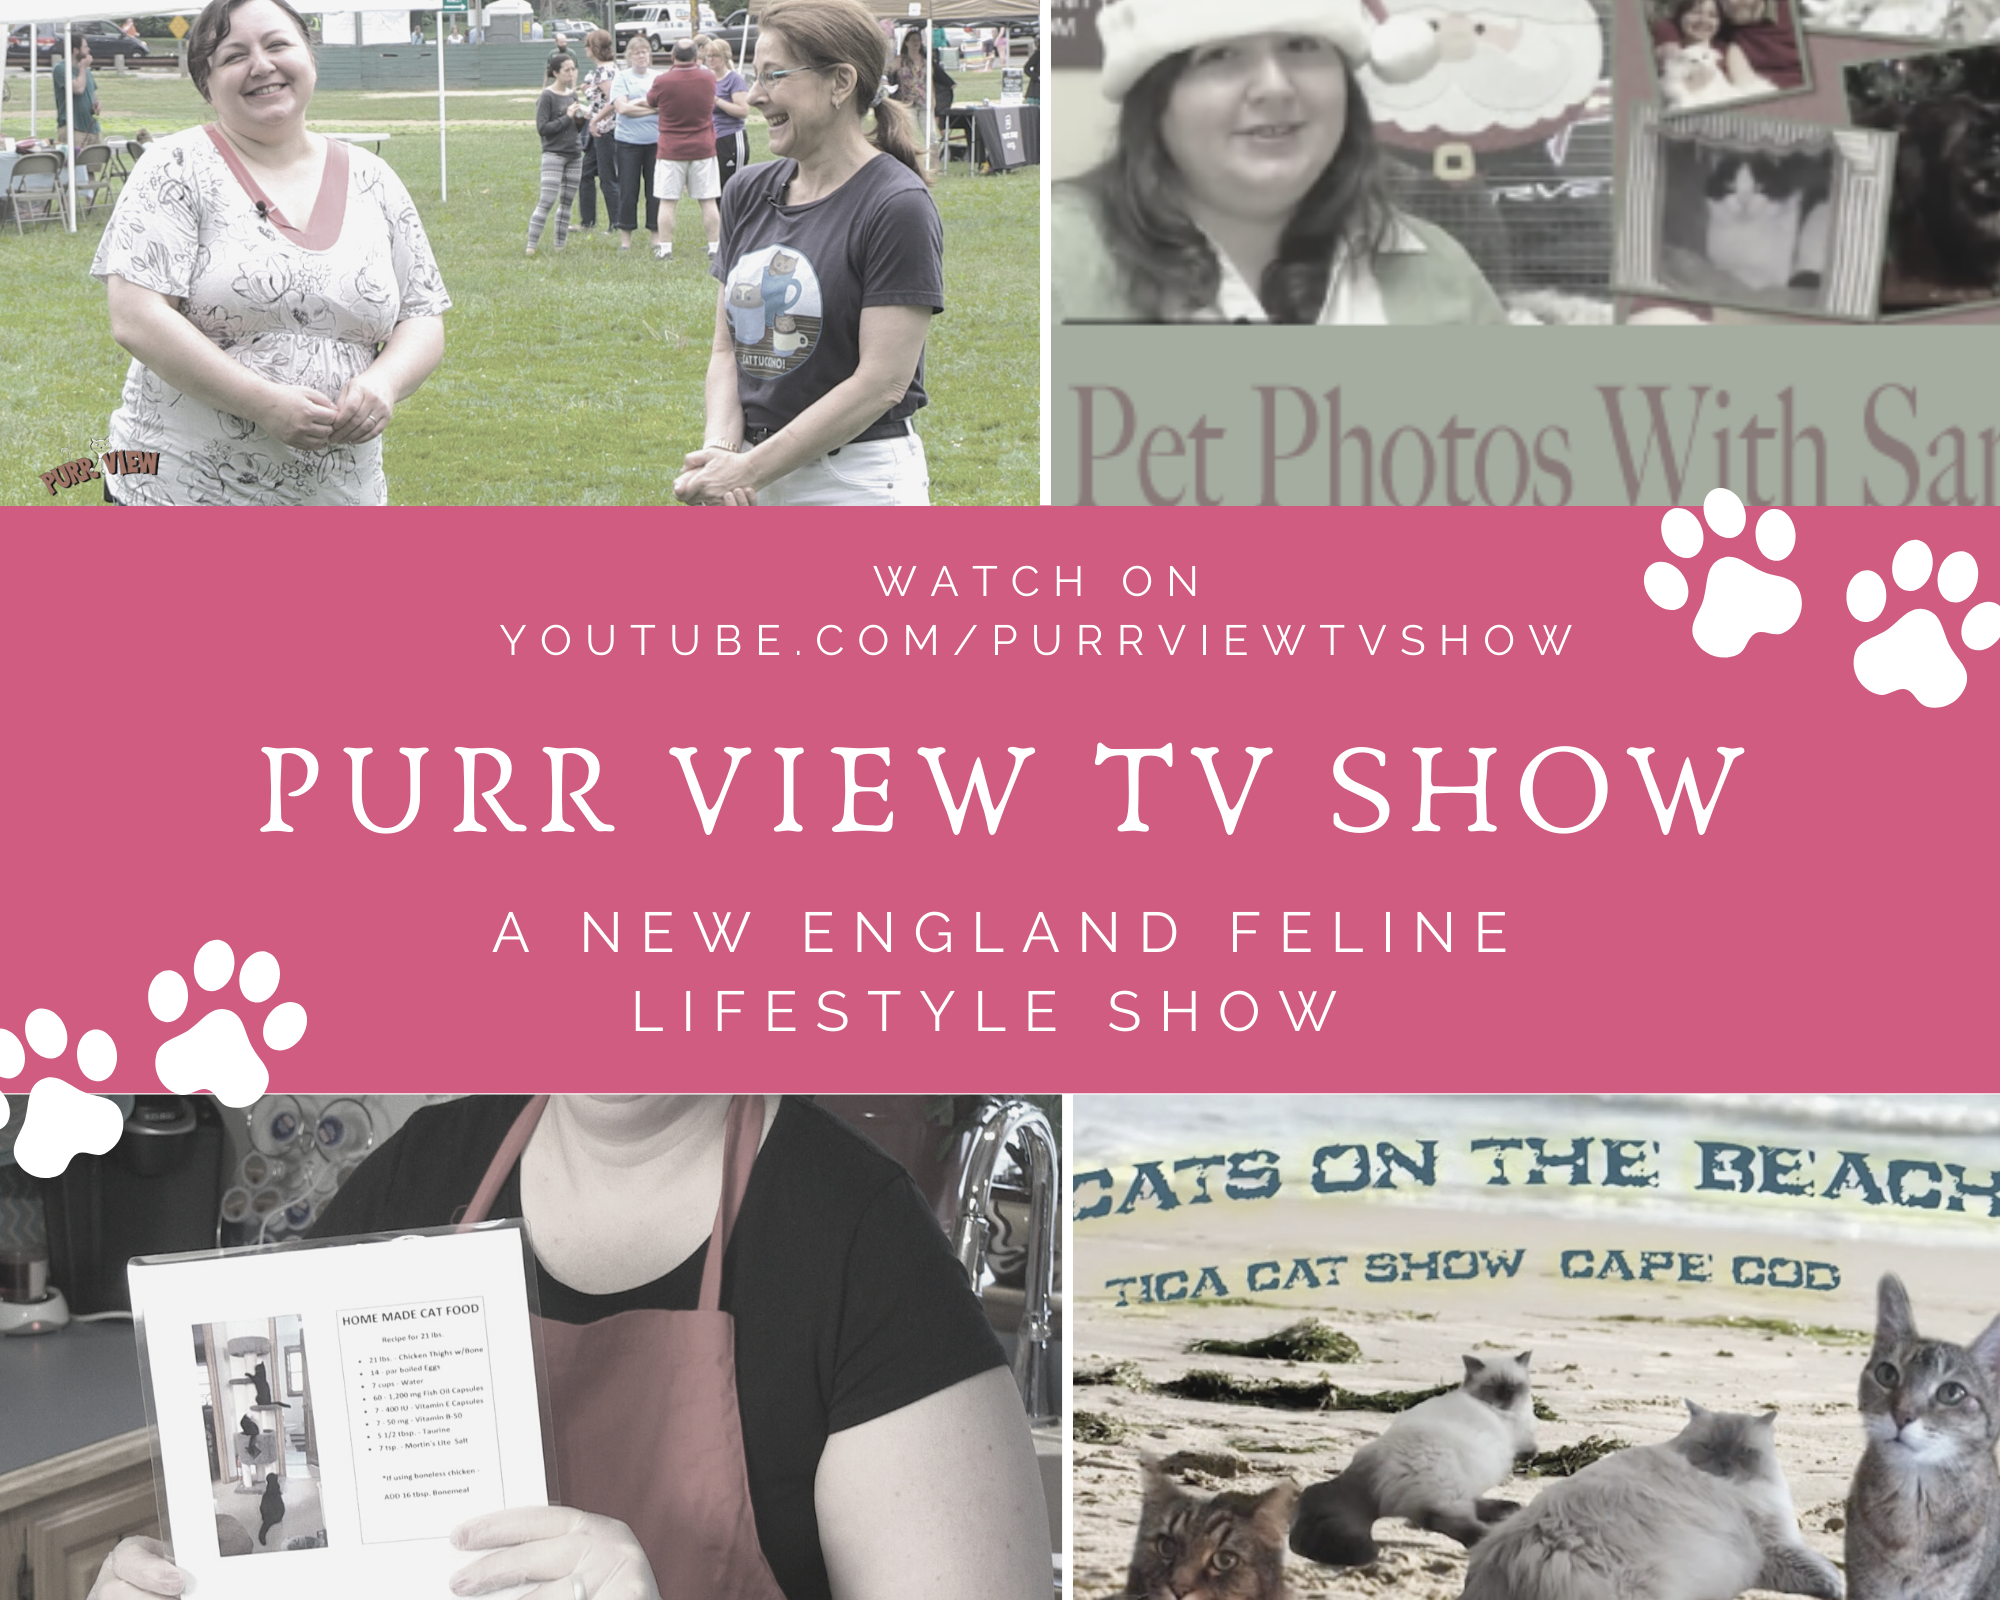 Watch Purr View TV Show on https://www.youtube.com/user/PurrViewTVShow